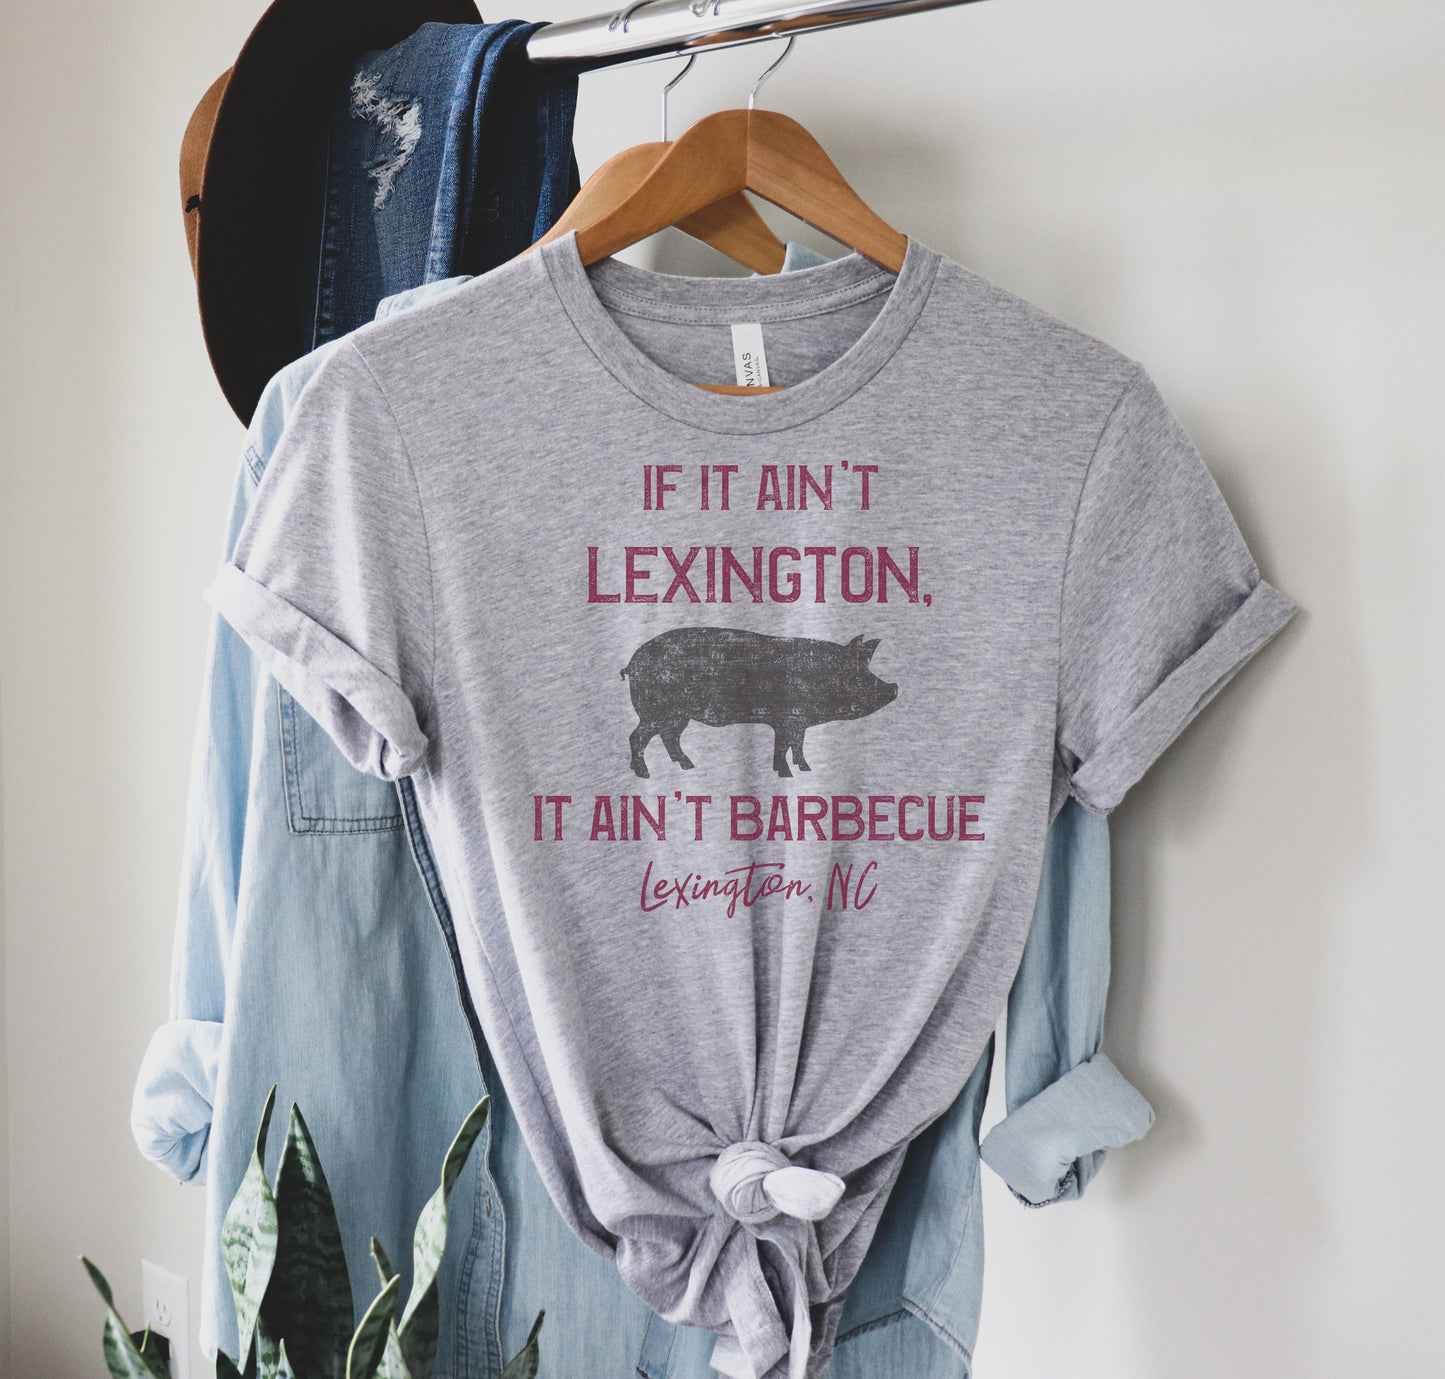 If it ain't Lexington it ain't barbecue tee shirt